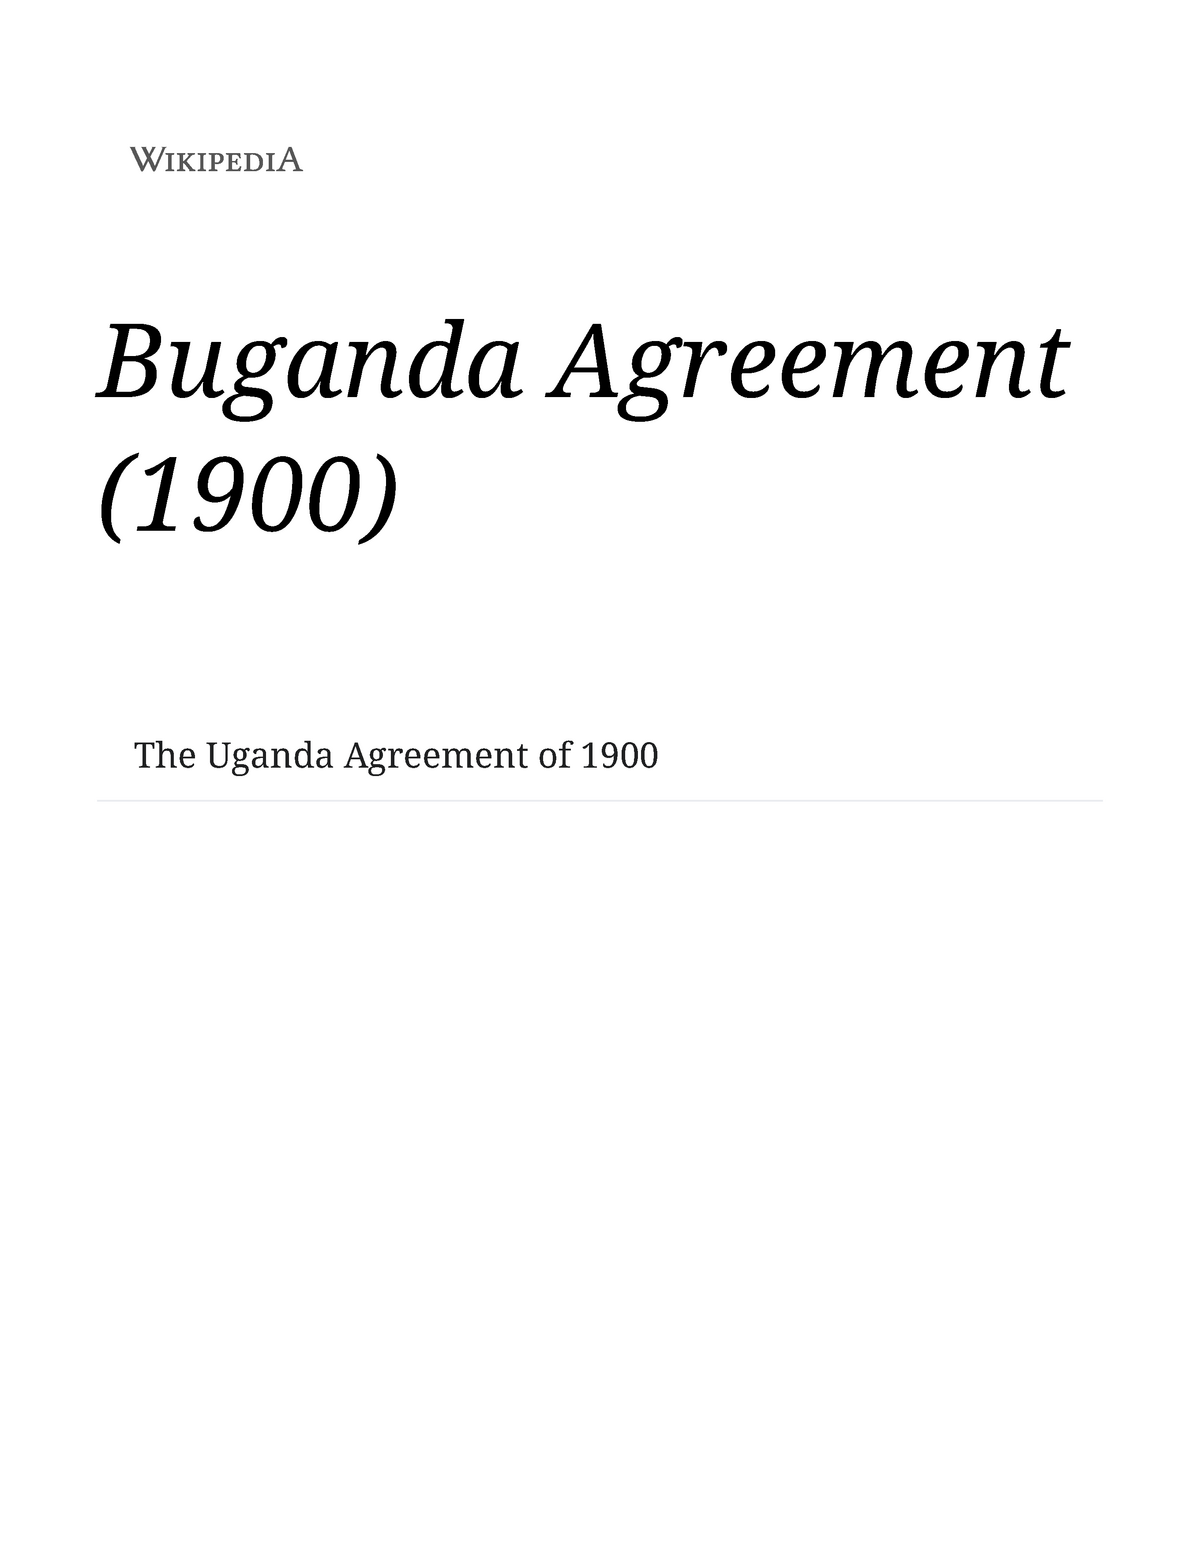 buganda agreement